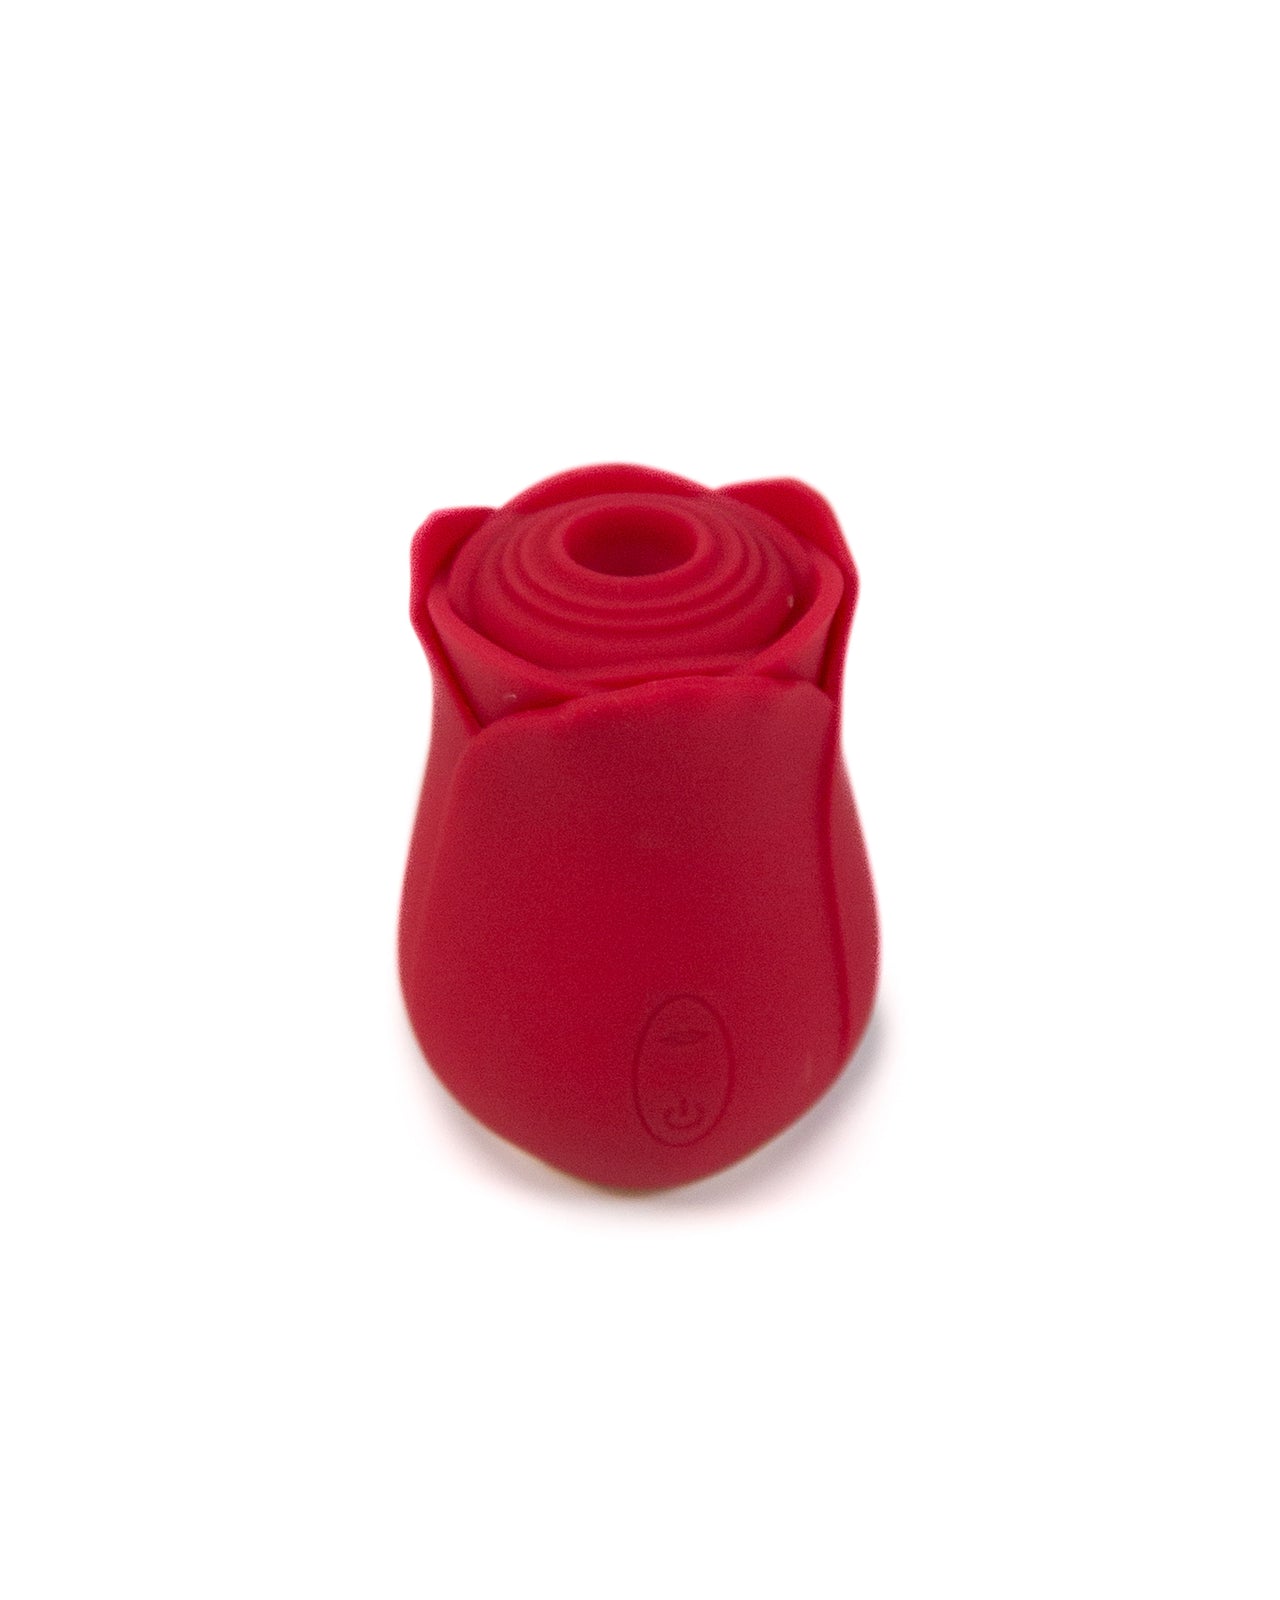 Stag Shop - Wild Rose Vibrator Air Pulse Clitoral Stimulator - Red